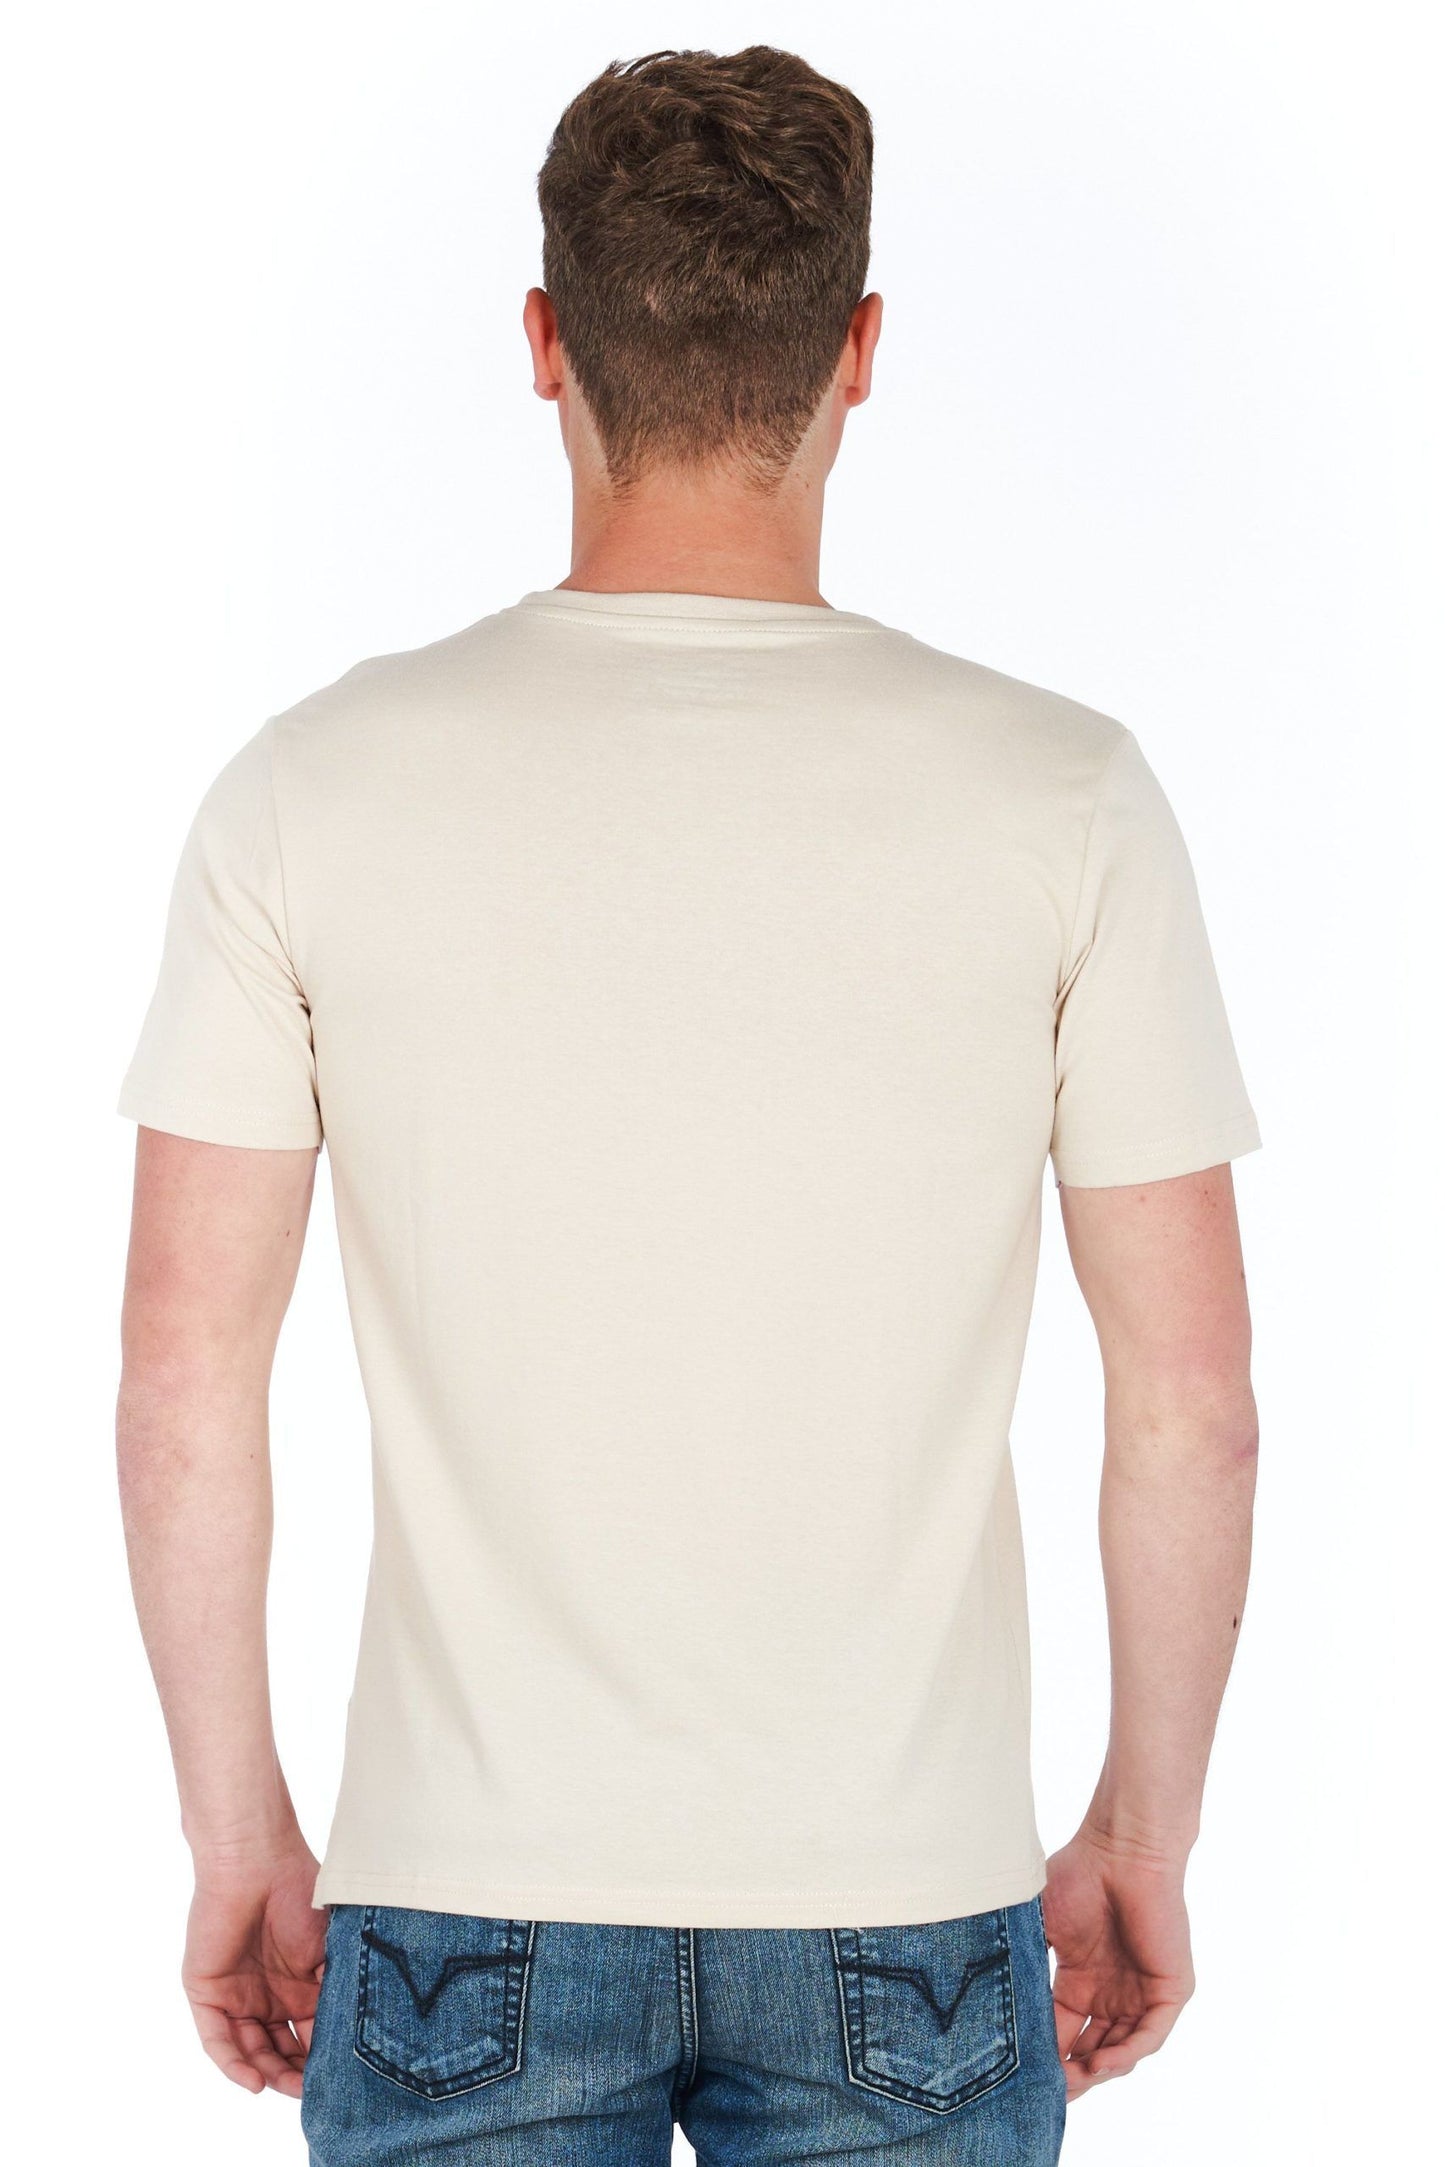 Sleek Silver Slim Fit Jersey T-Shirt